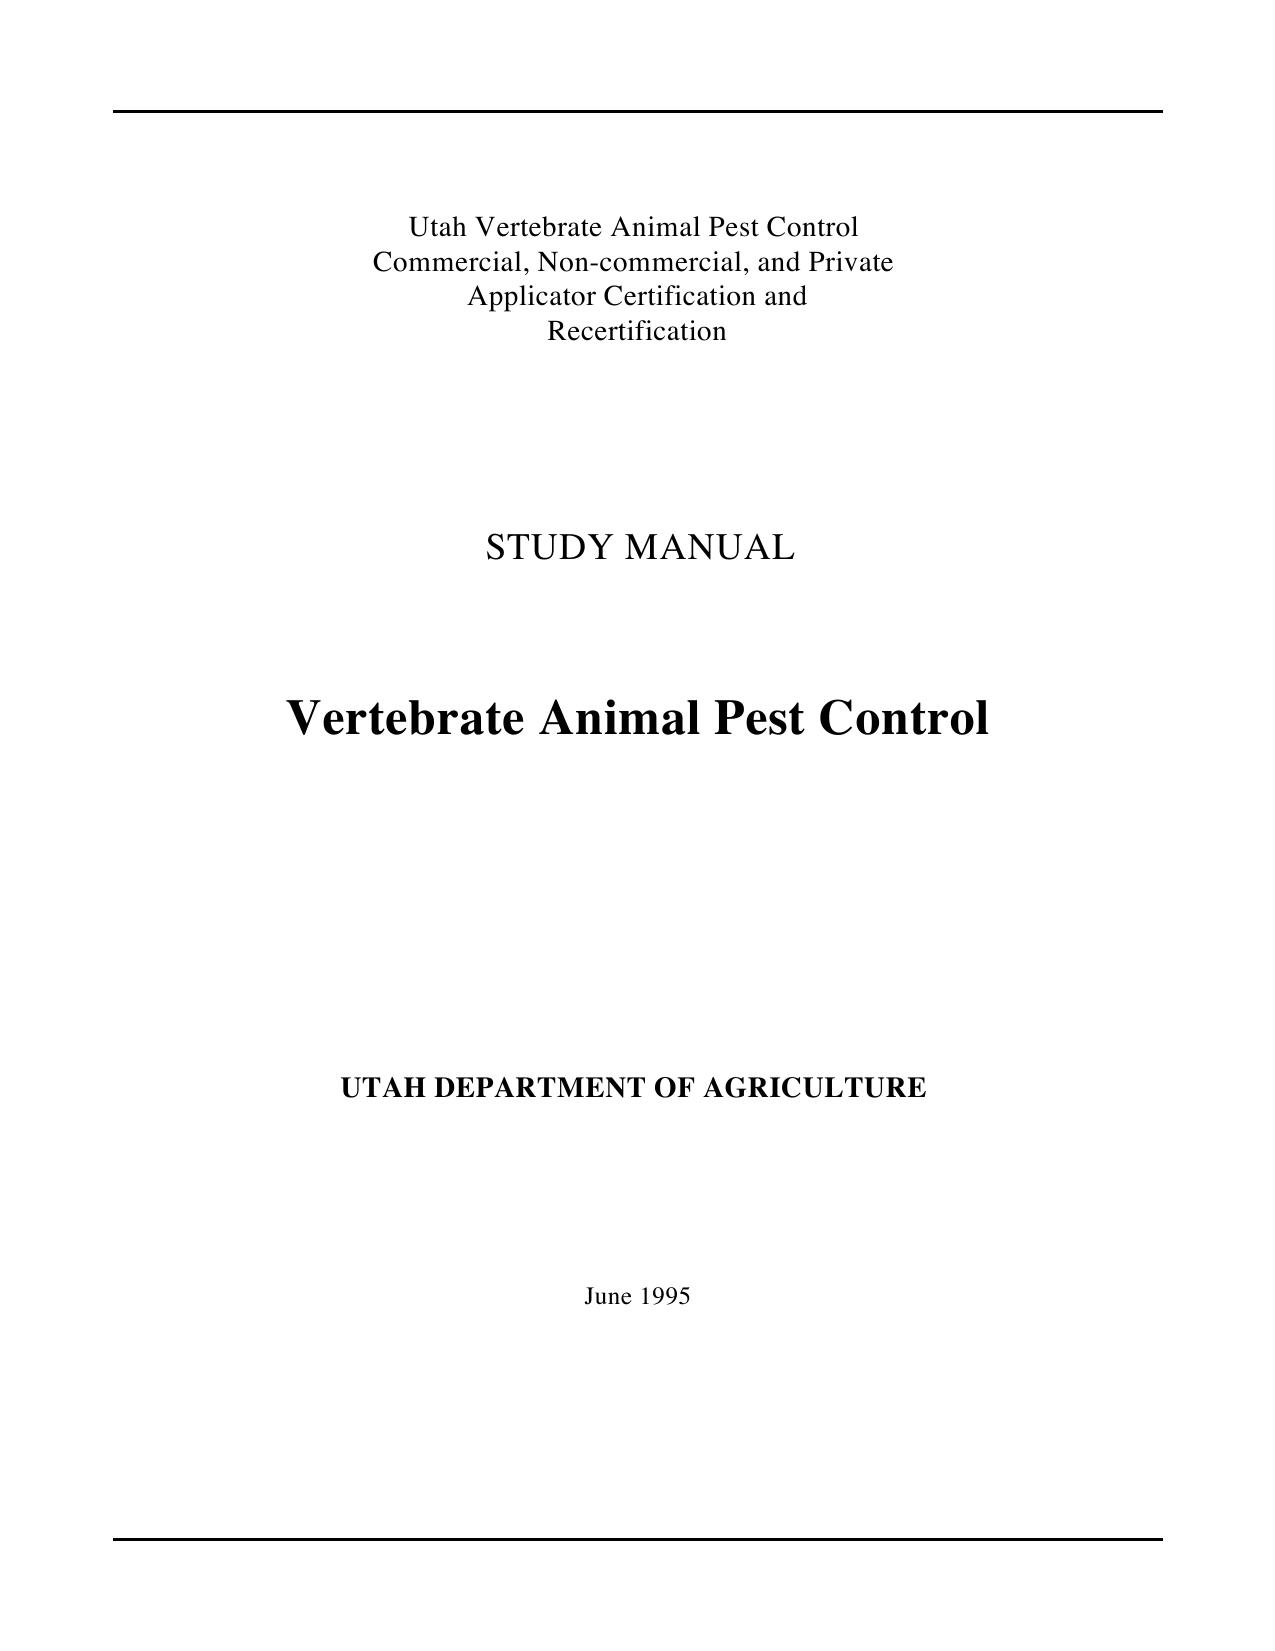 Vertebrate Animal Pest Control Study Manual